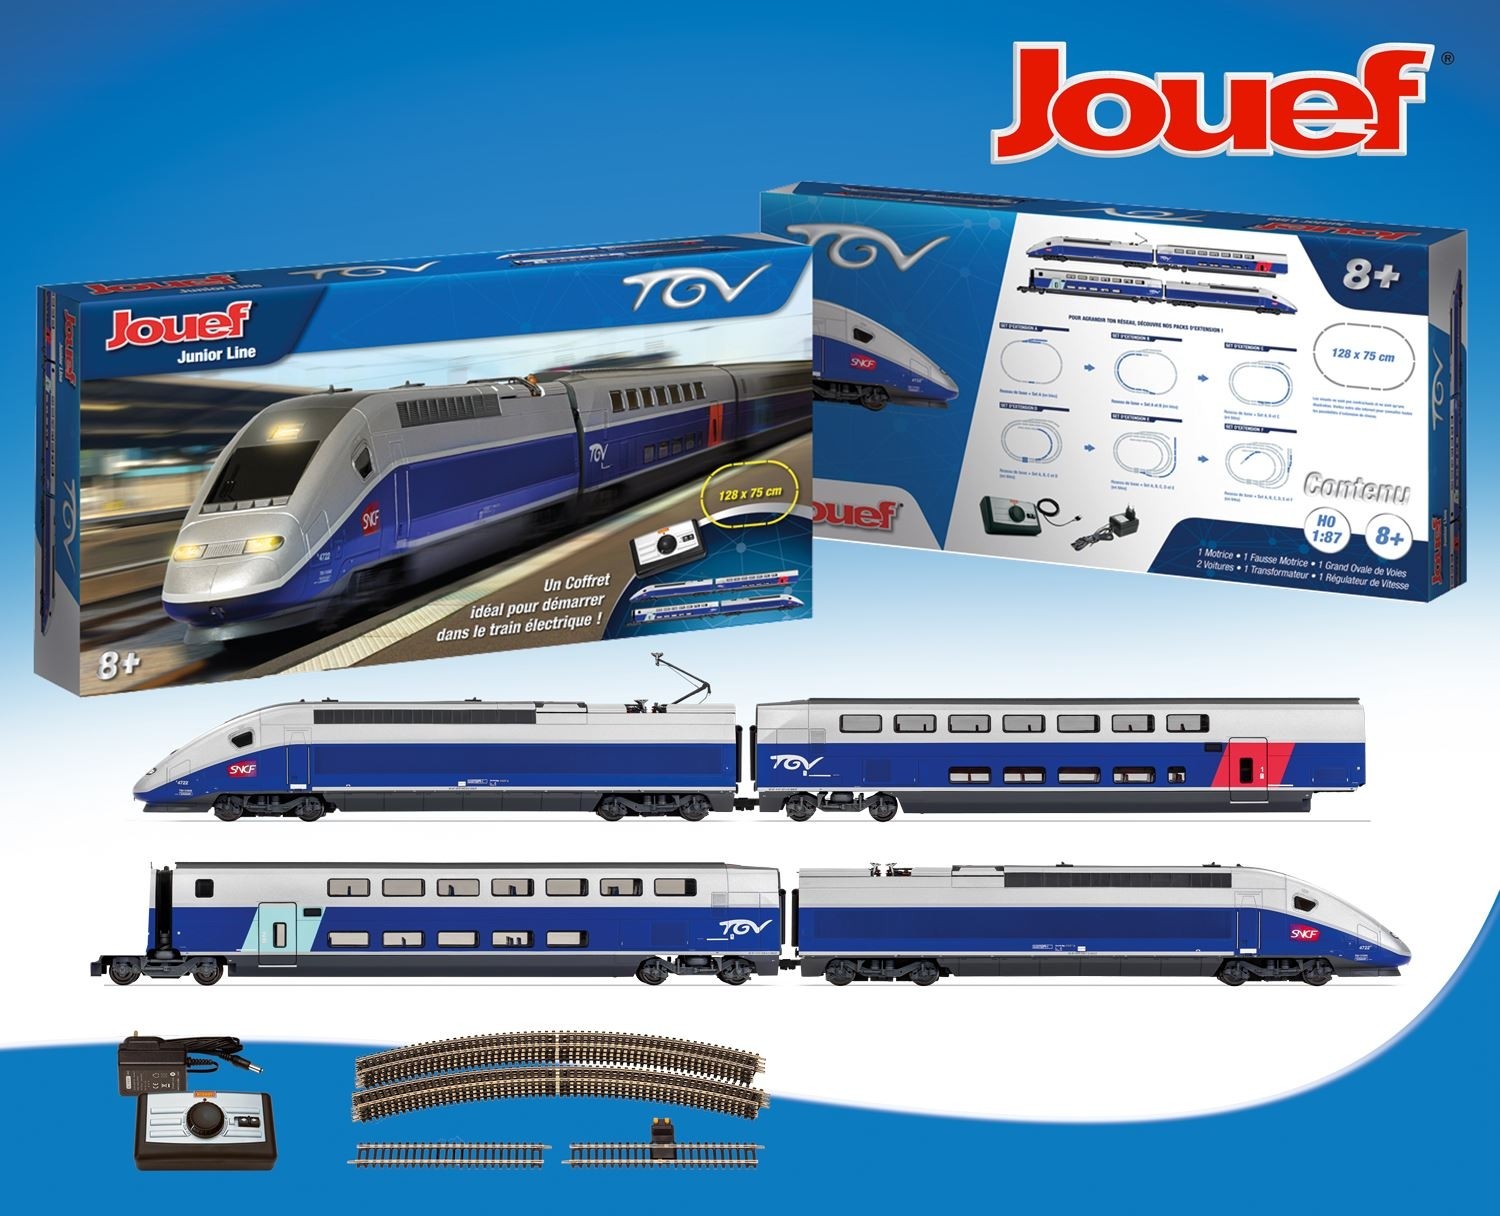 HJ1062 Jouef Junior (H0 1:87), SNCF Infra, starter set with 2-axle diesel  locomotive and 3 wagons, controller, transformer, starter track, track mat